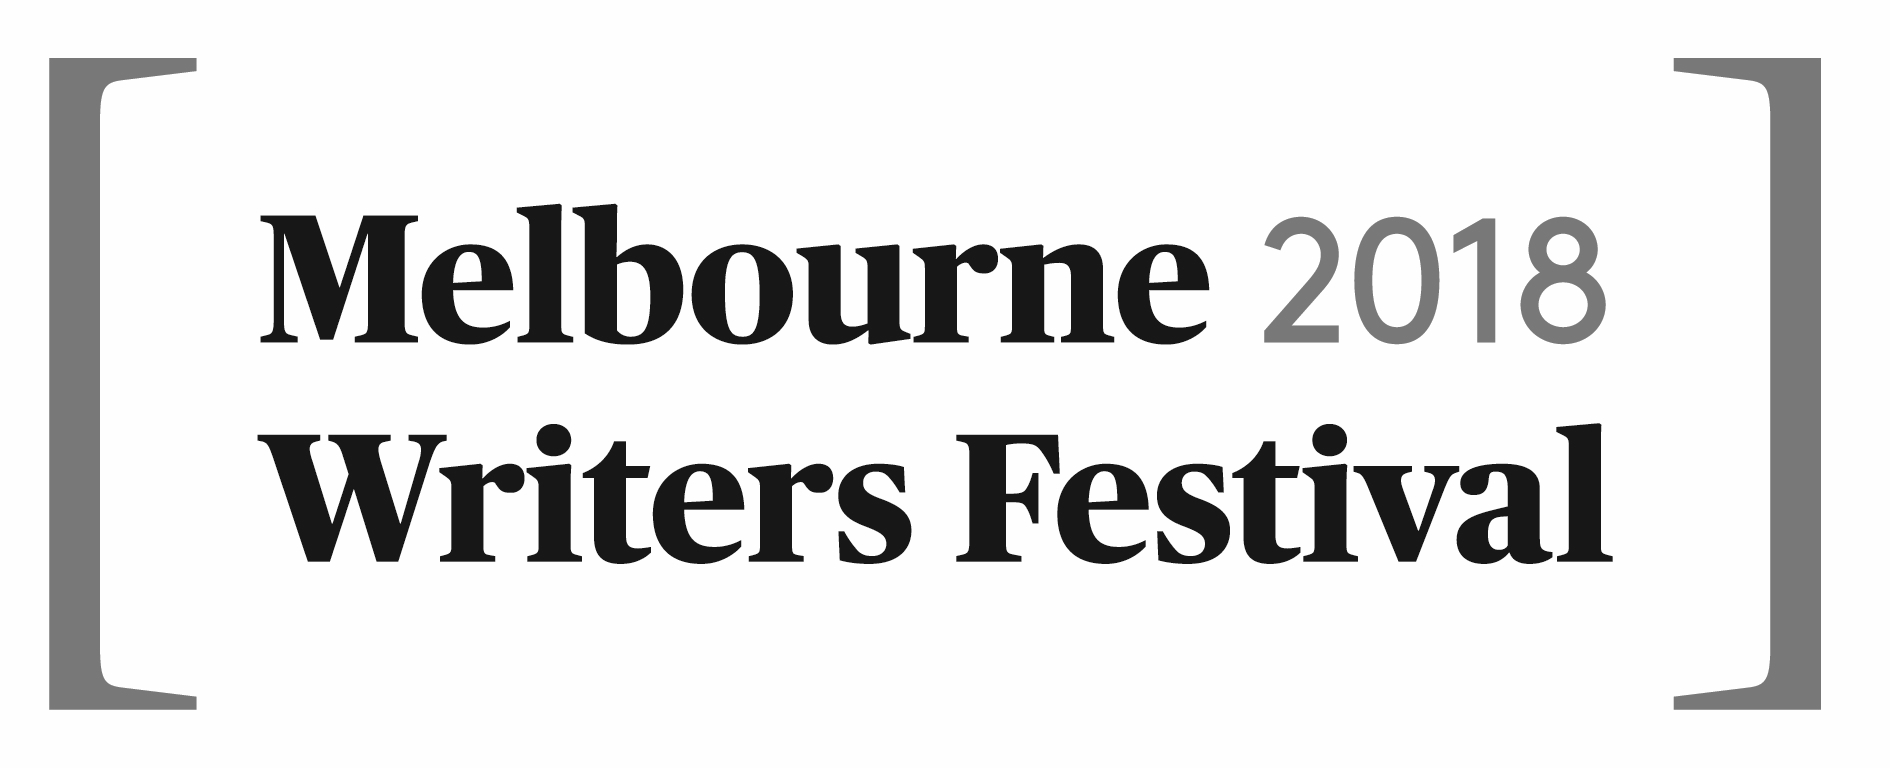 Melbourne Writers' Festival